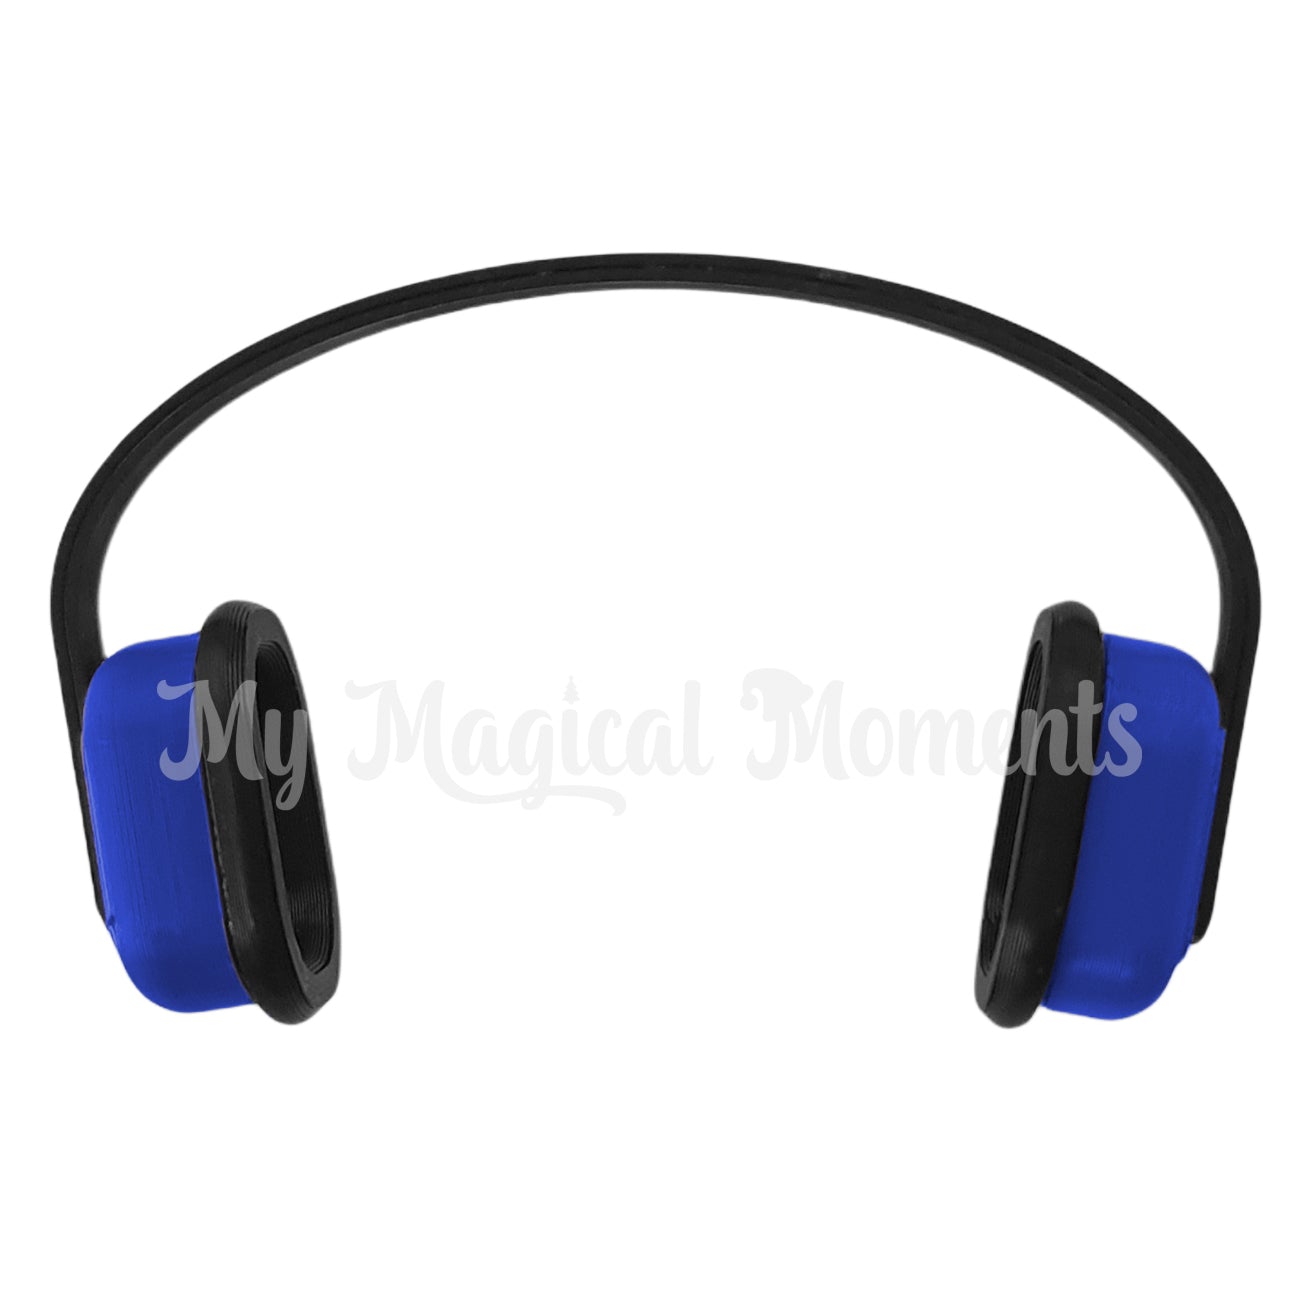 Elf sized sensory headphone blue